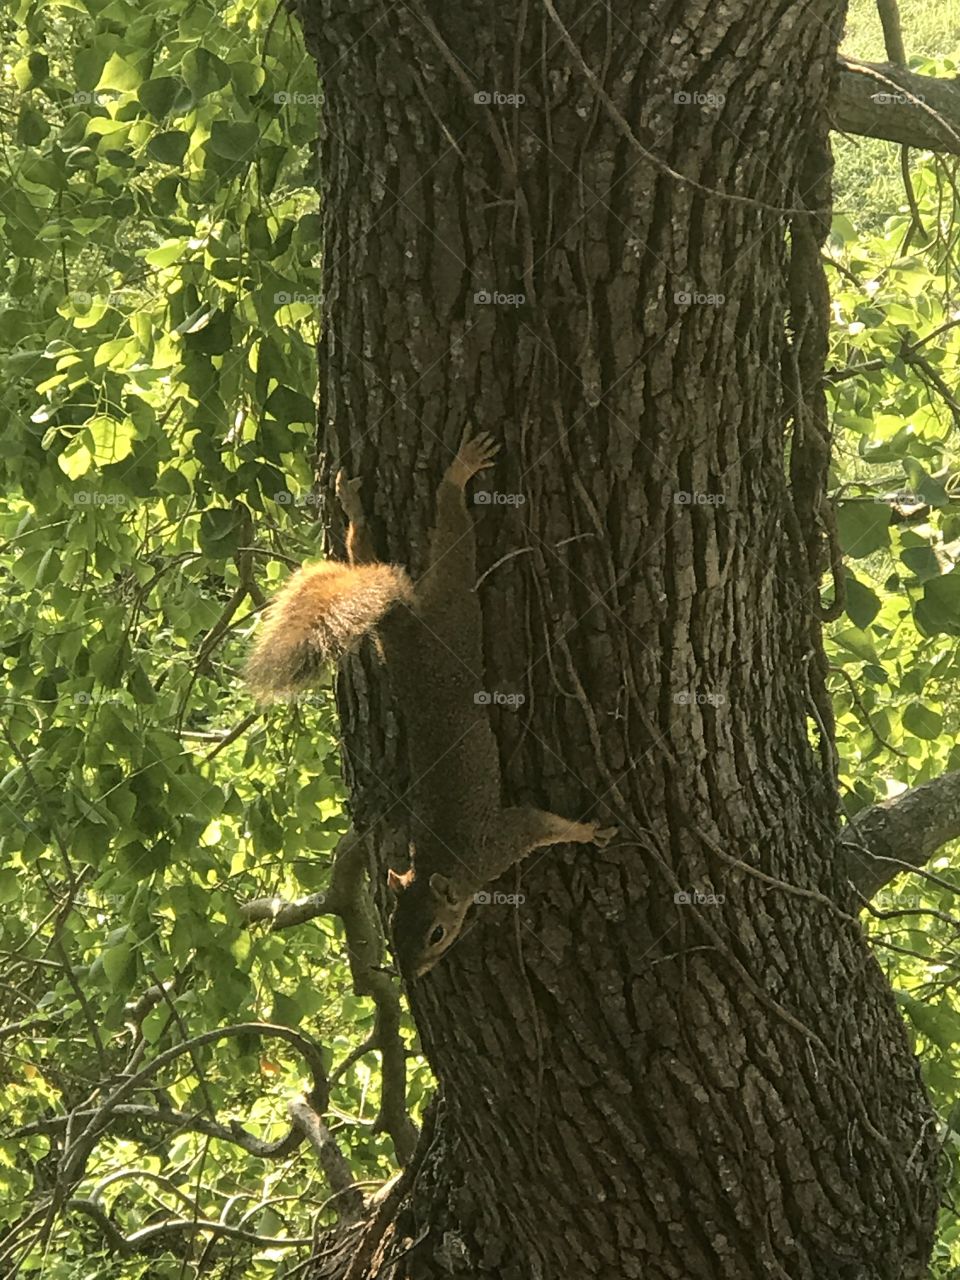 Squirrel climbing down 